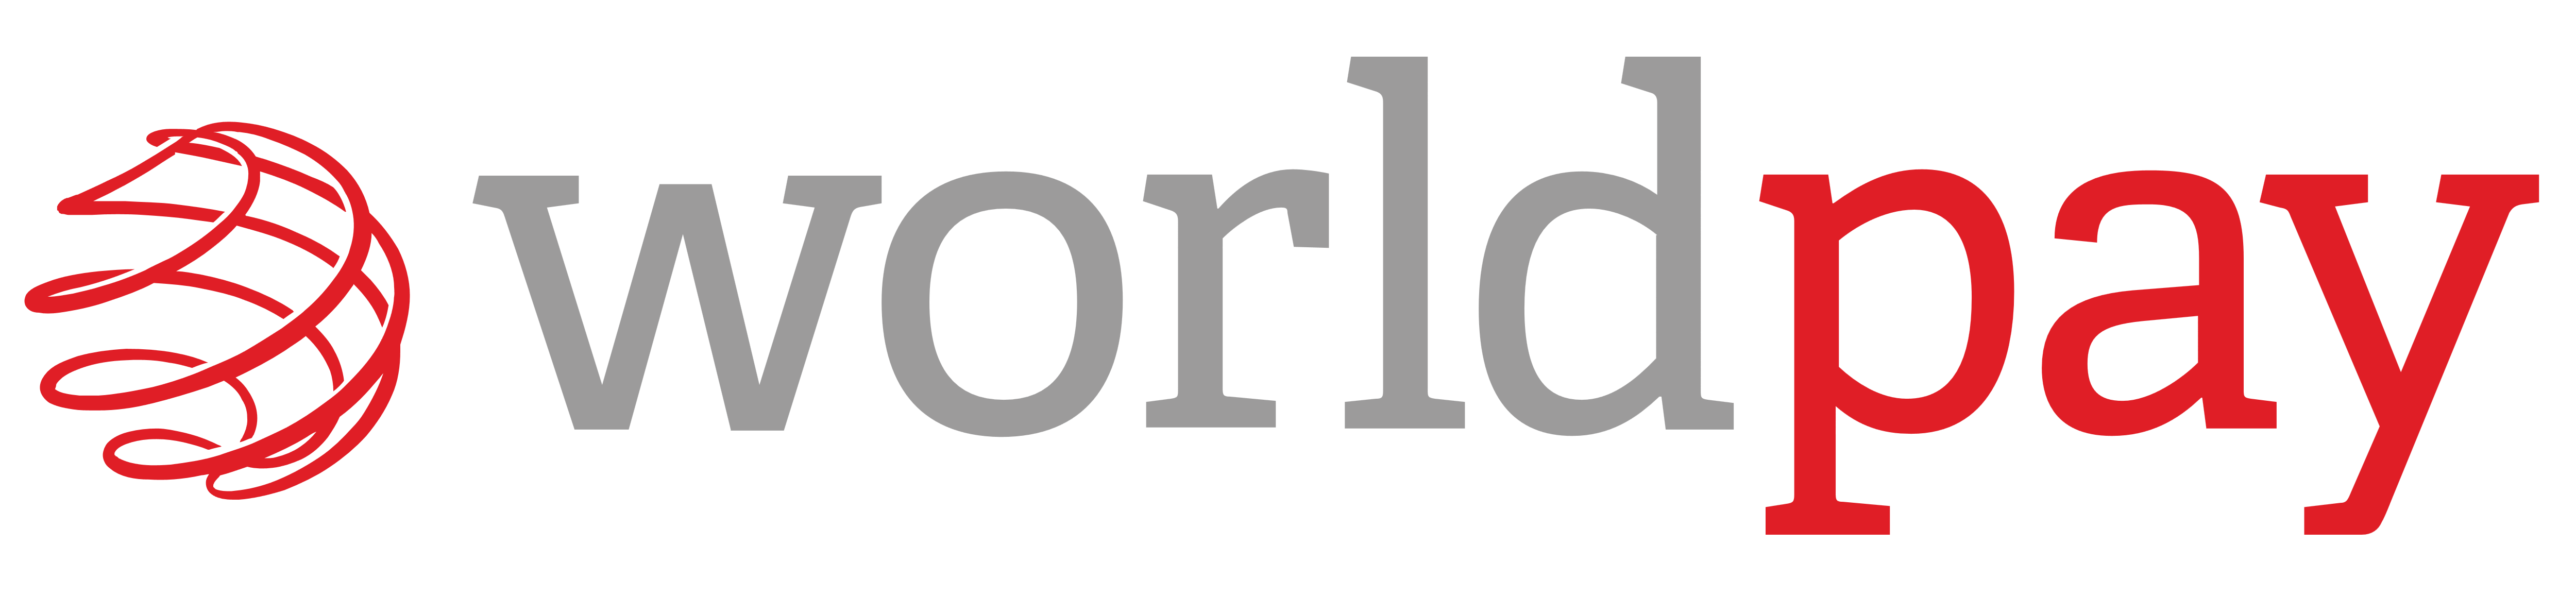 Worldpay logo, logotype